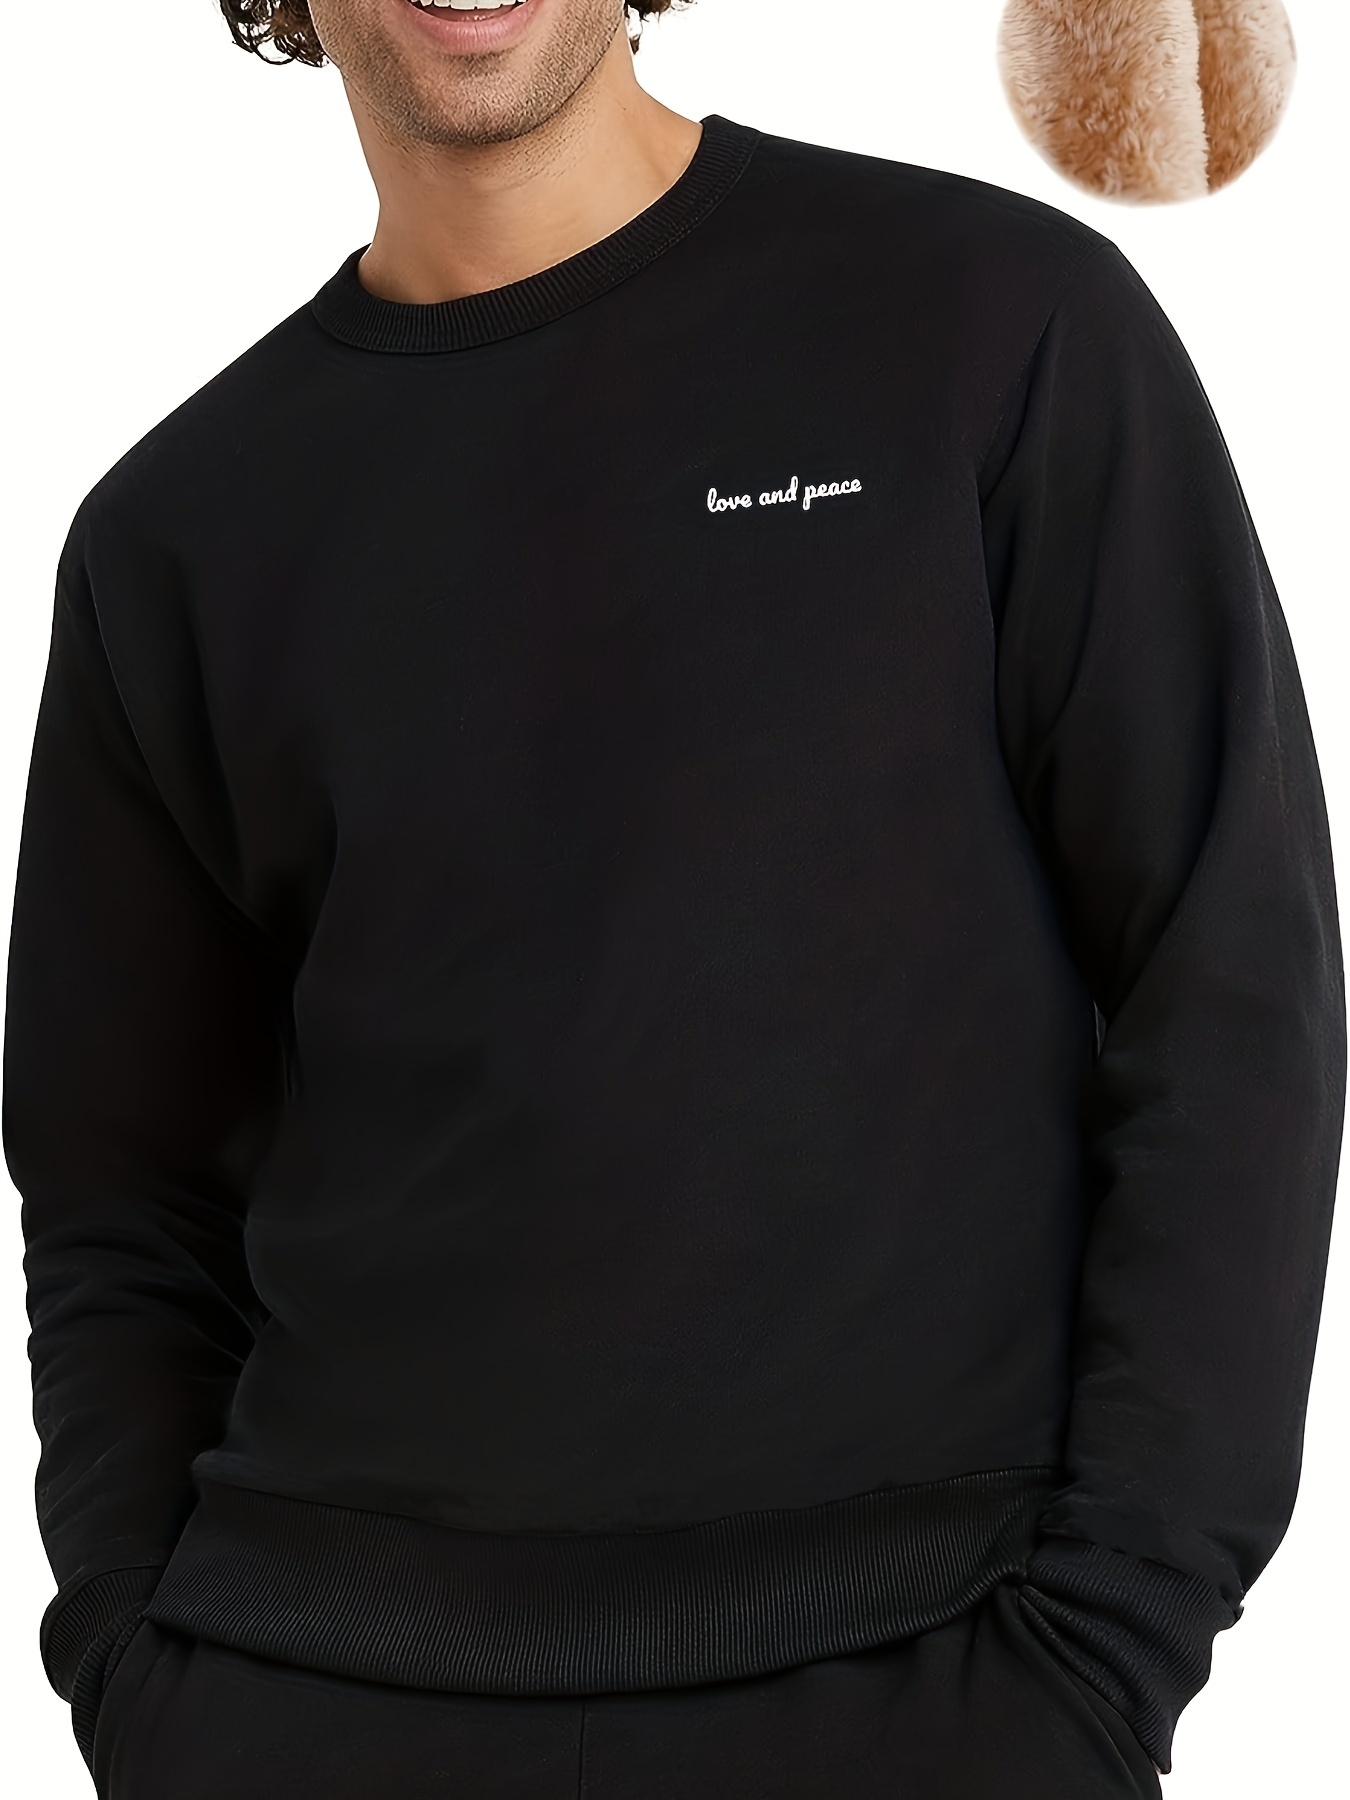 Love And Peace Print Trendy Sweatshirt, Men's Casual Graphic